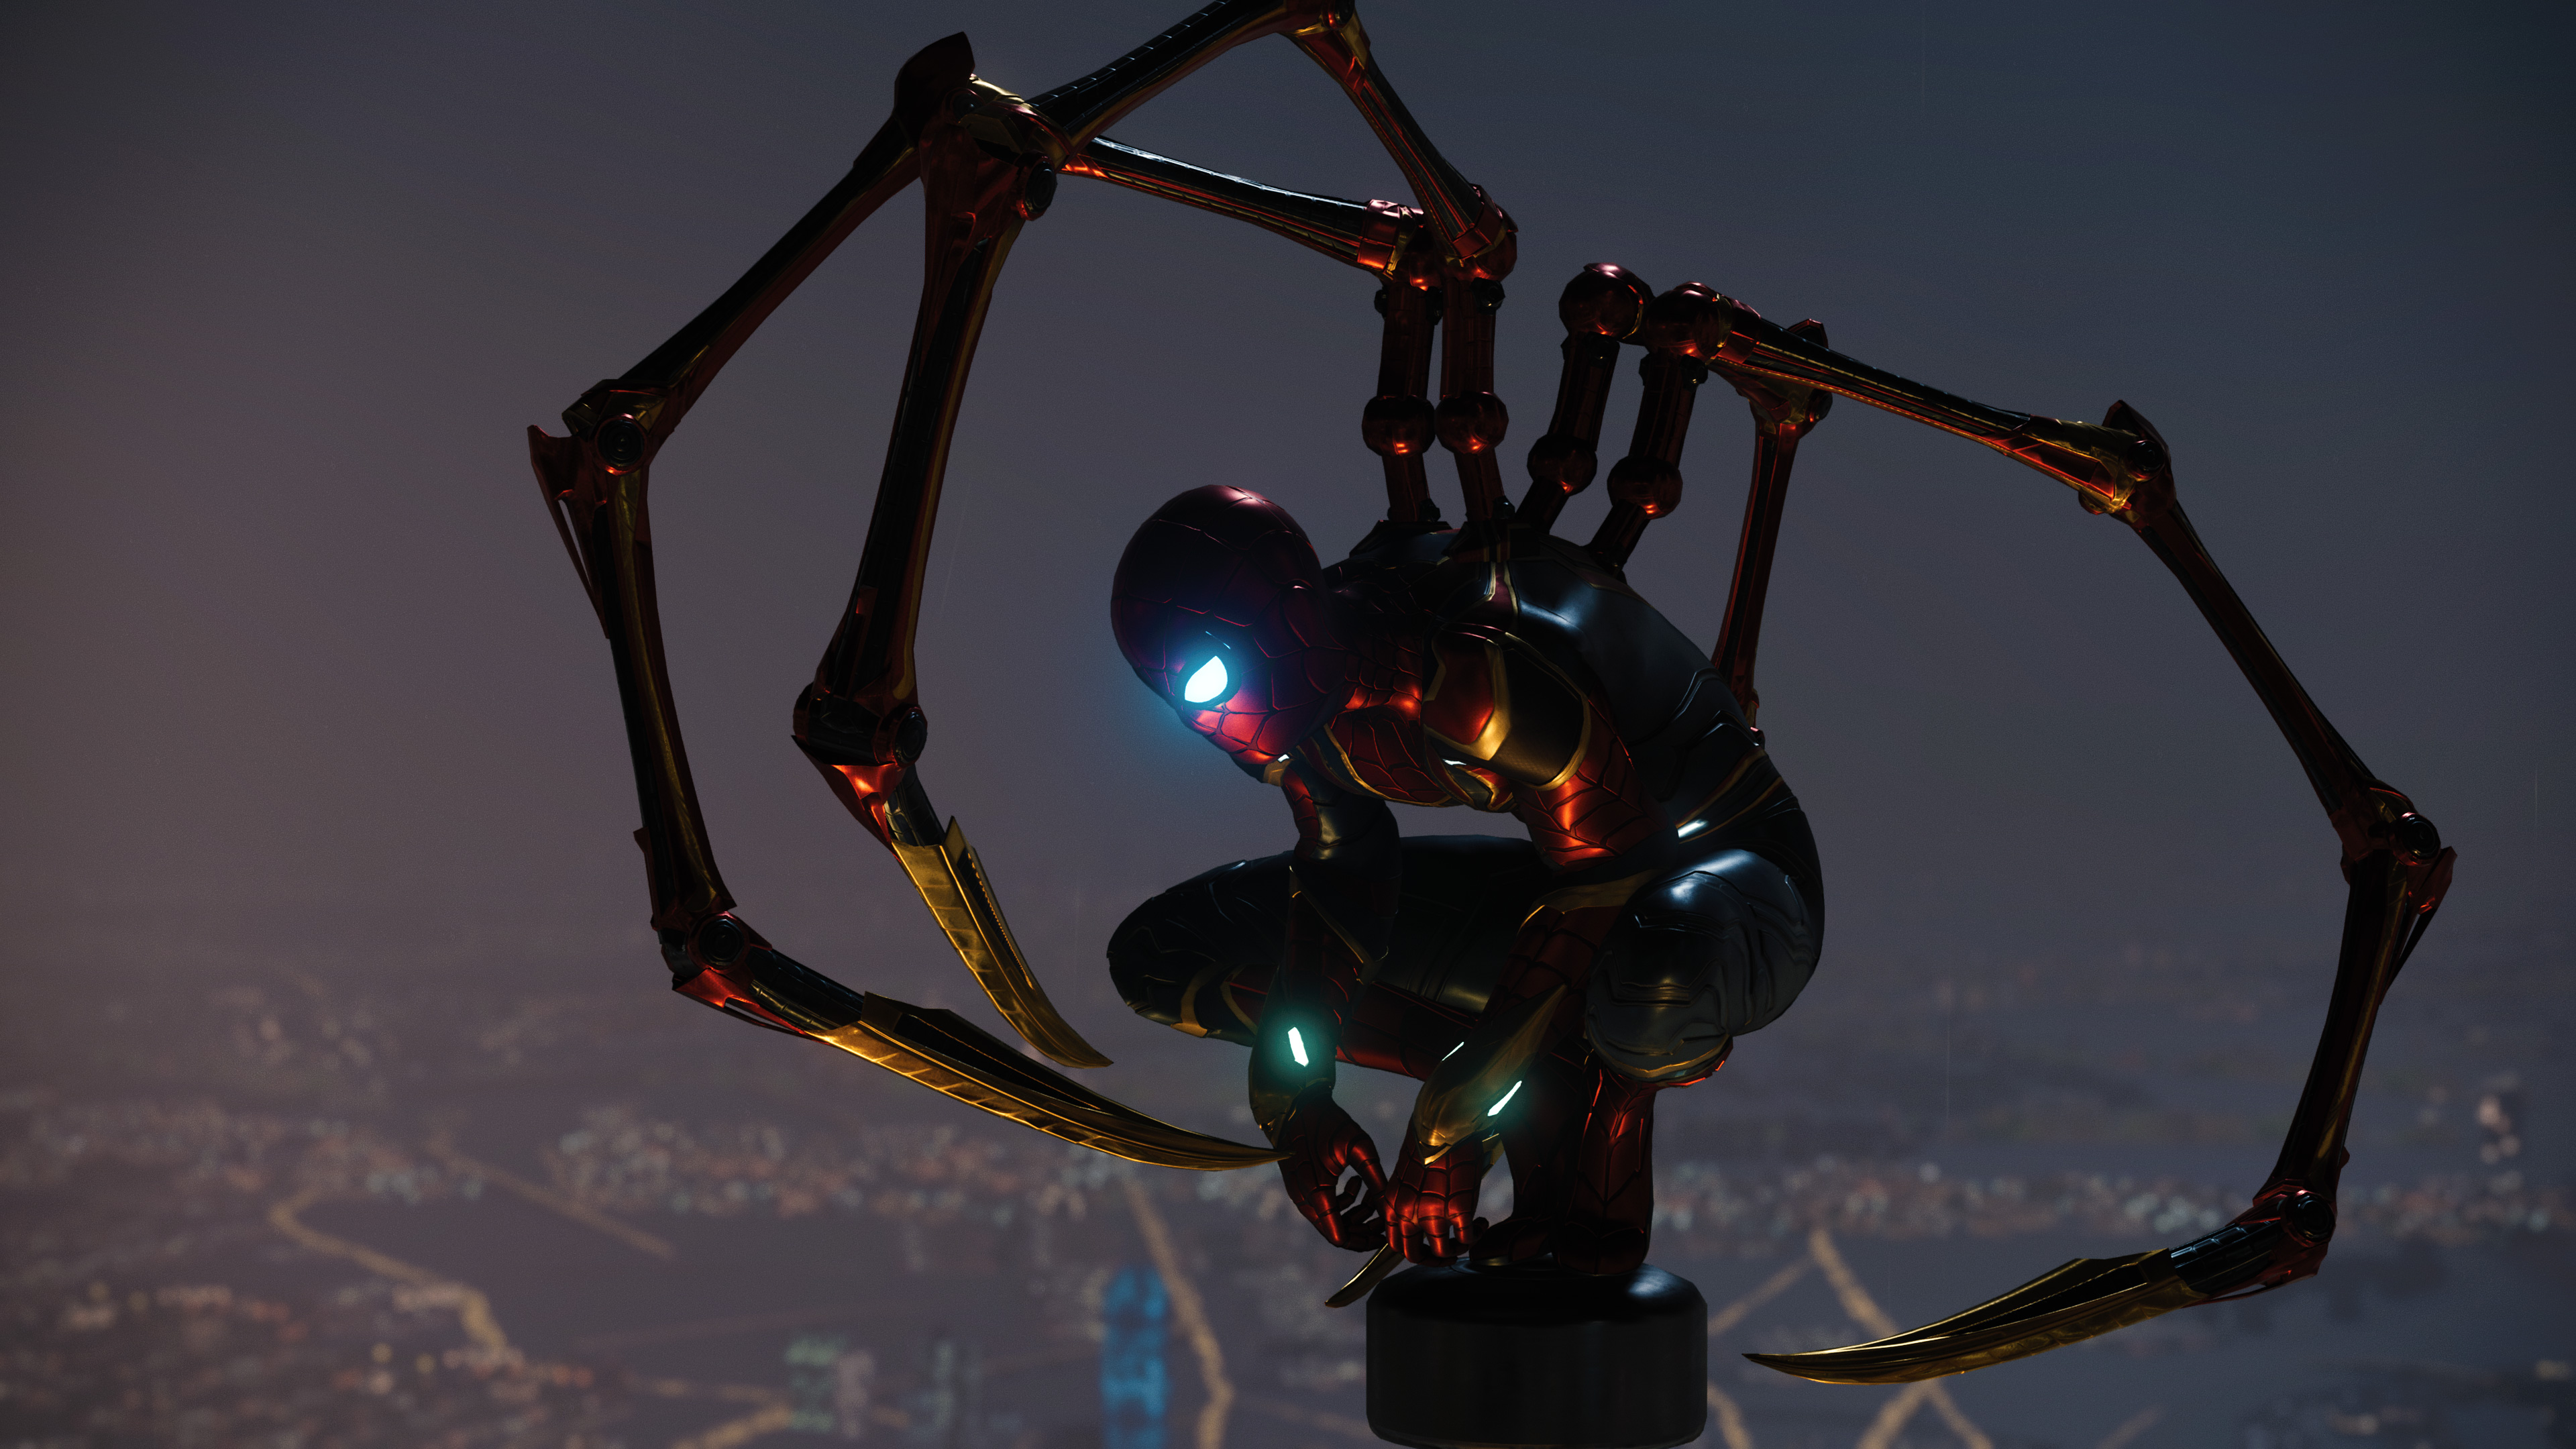 Iron Spider 4k Ultra HD Wallpaper. Background Image